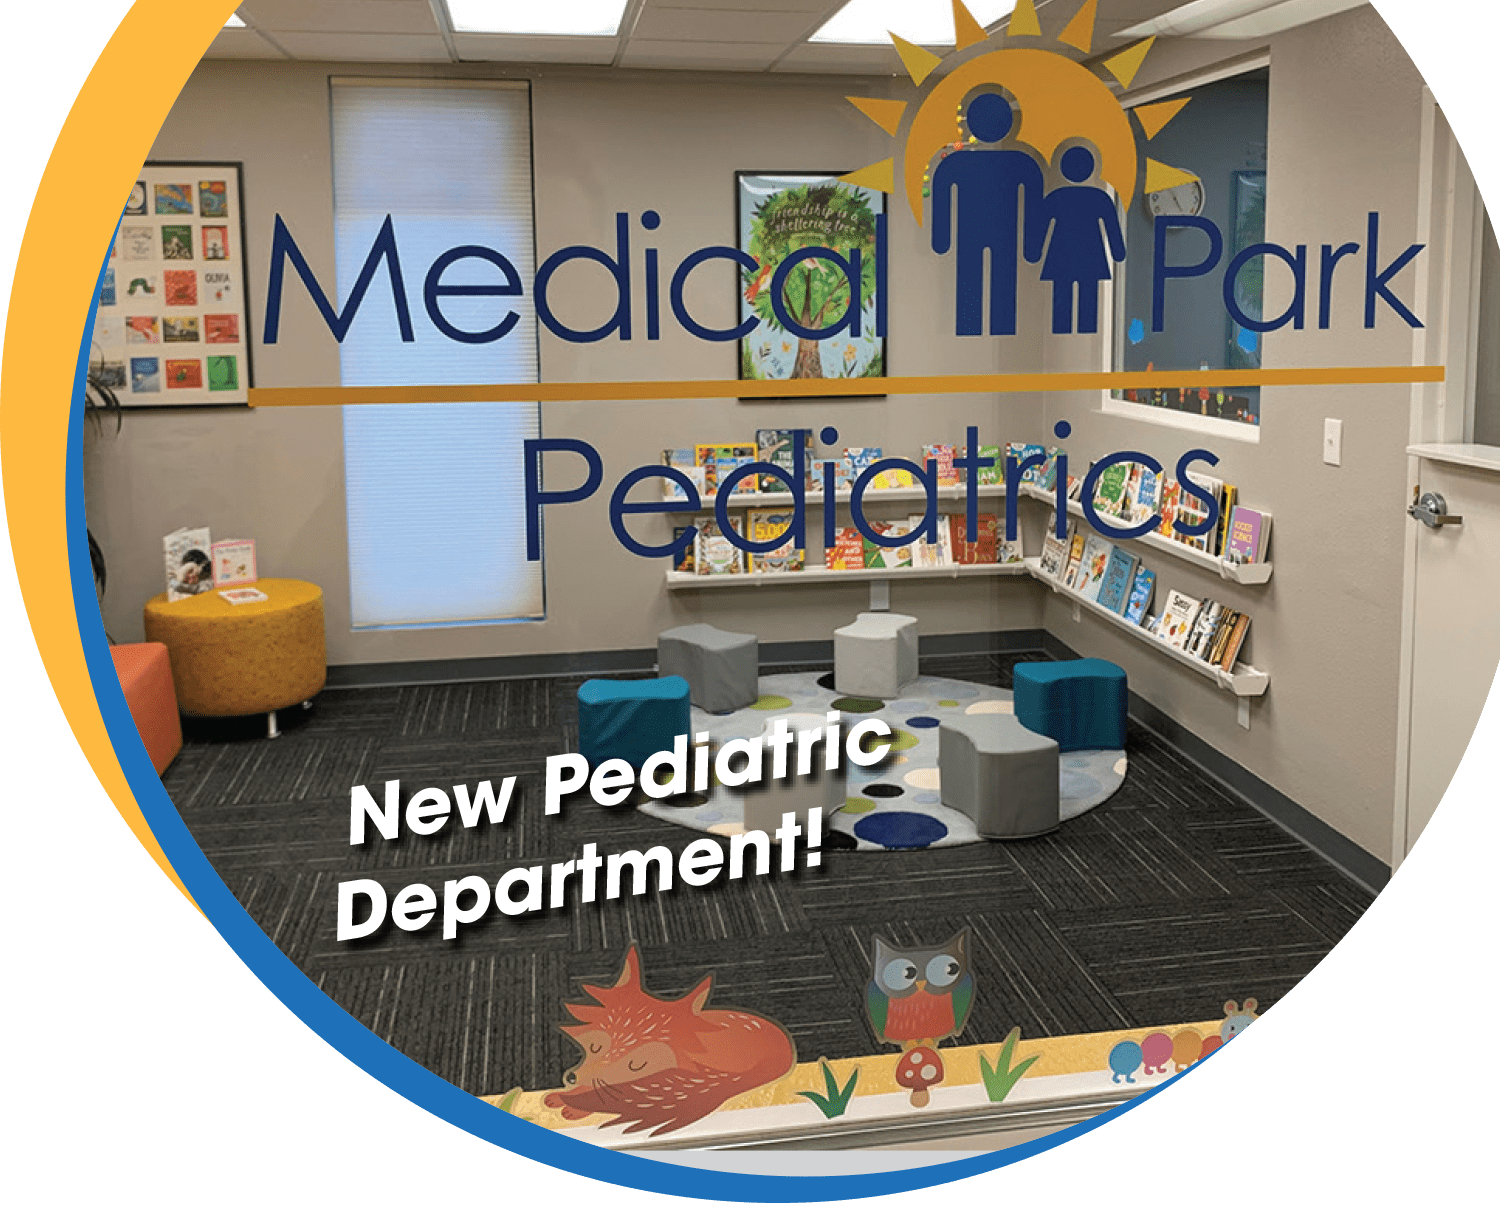 Medical Park Pediatrics Department